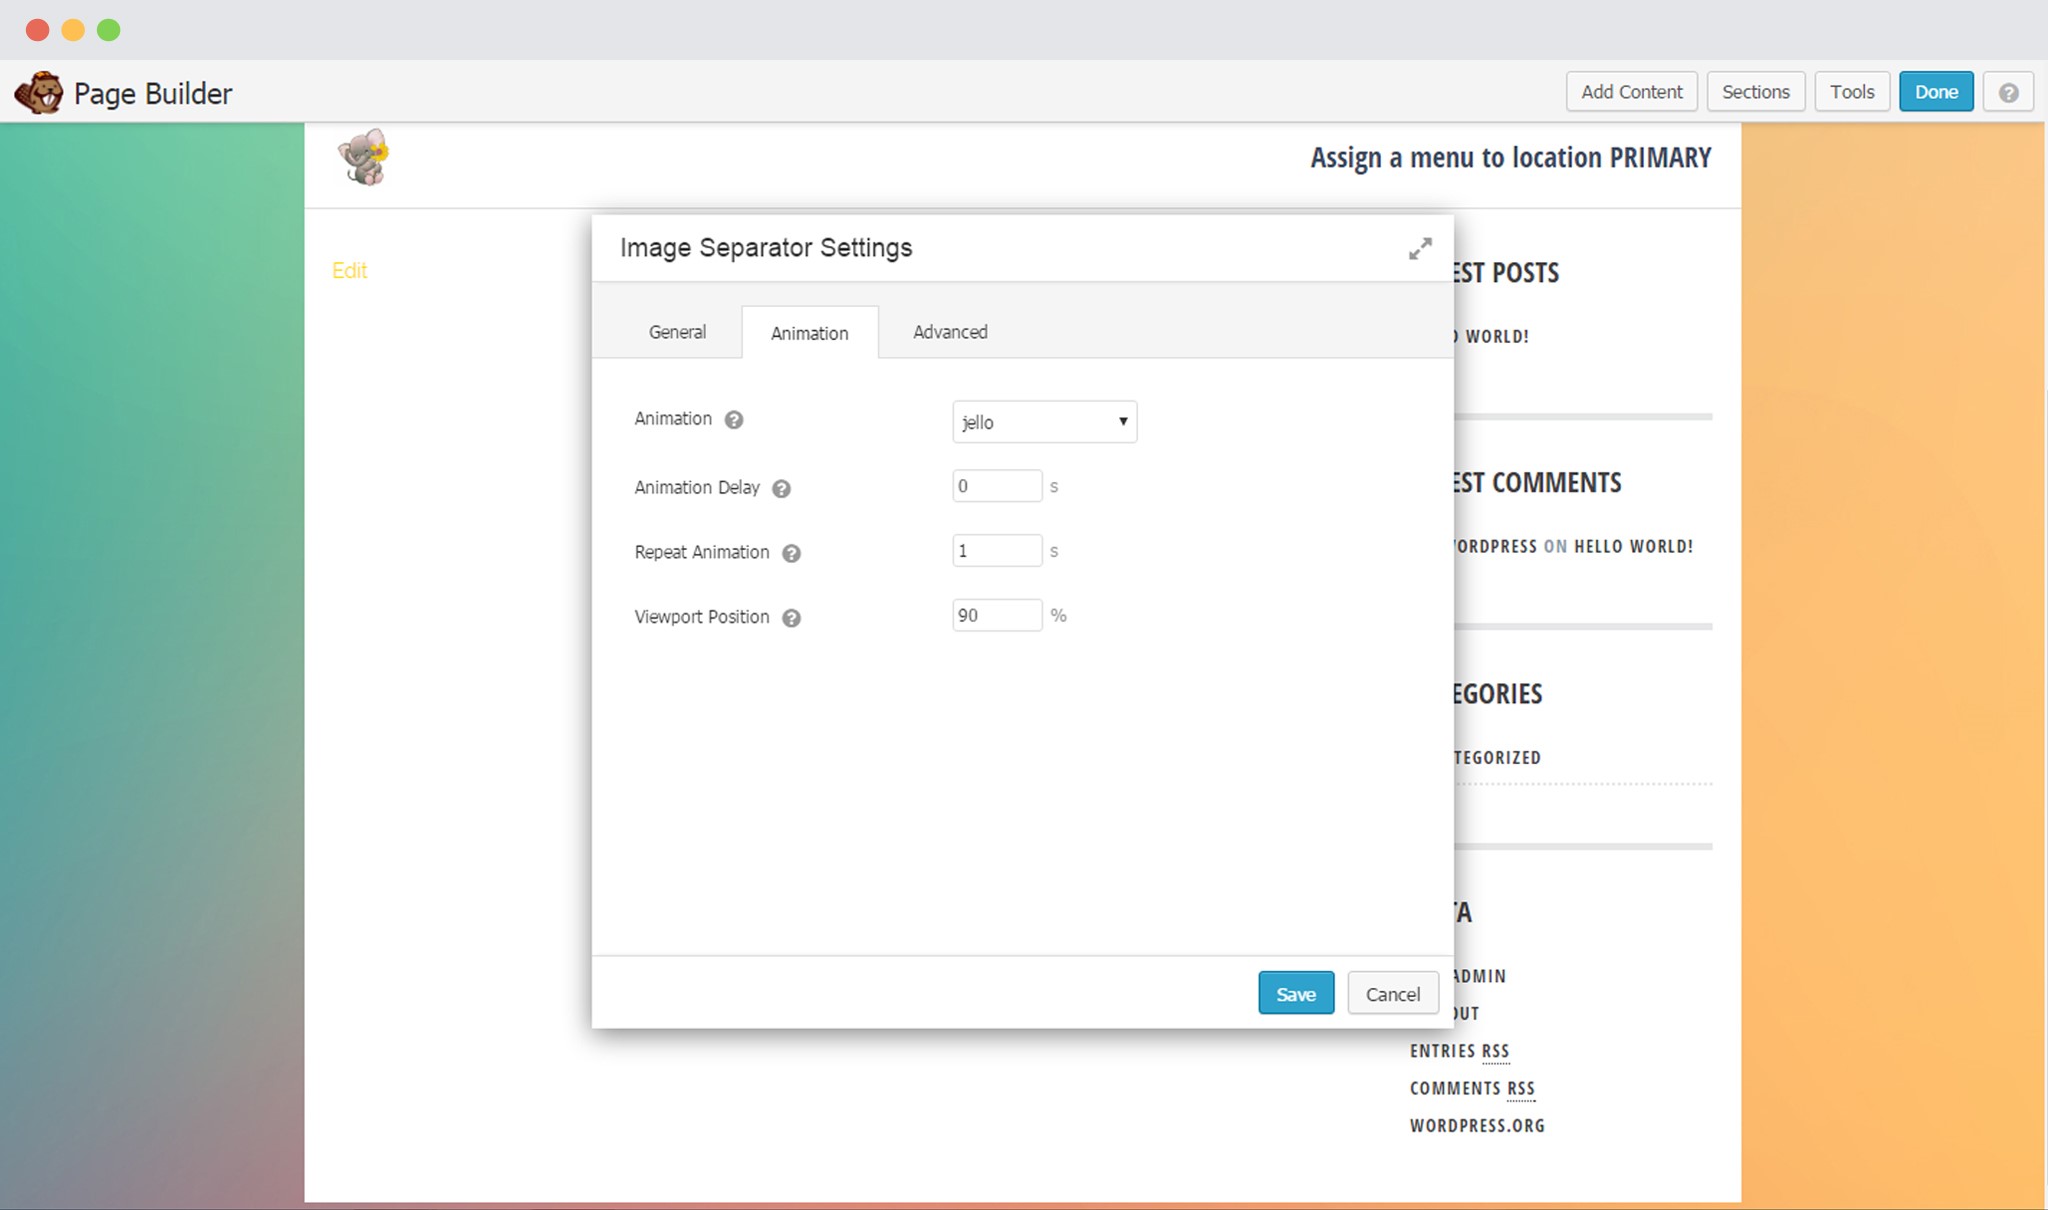 Animation settings of Image Separator